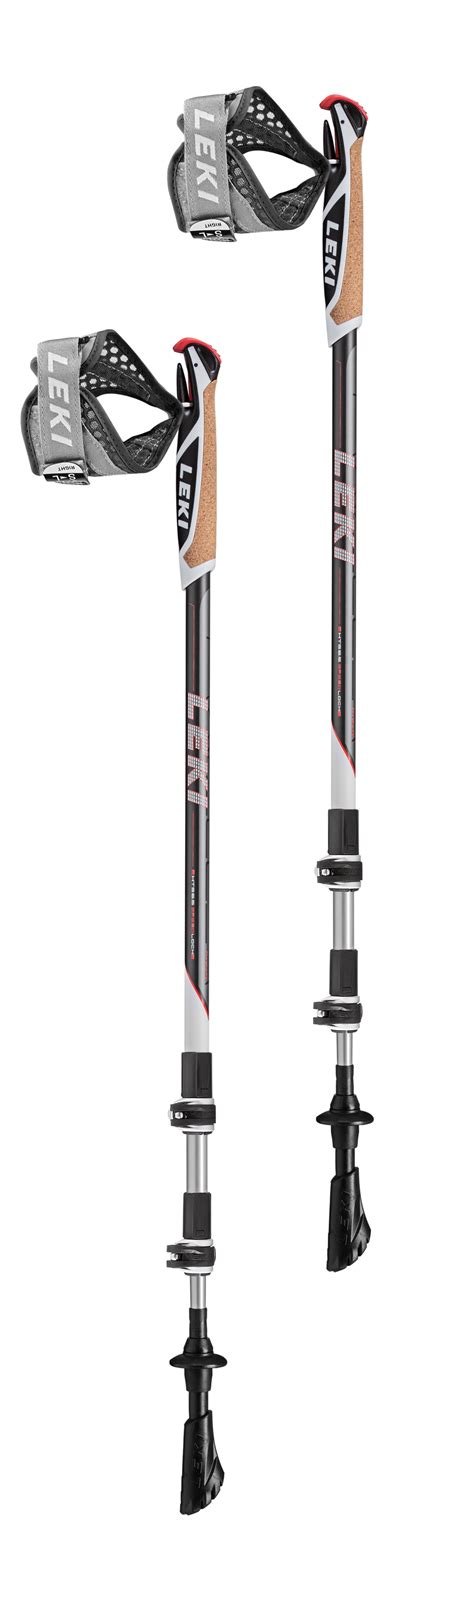 Leki Nw Smart Traveller Alu Adjustable Nordic Walking Pole Pair